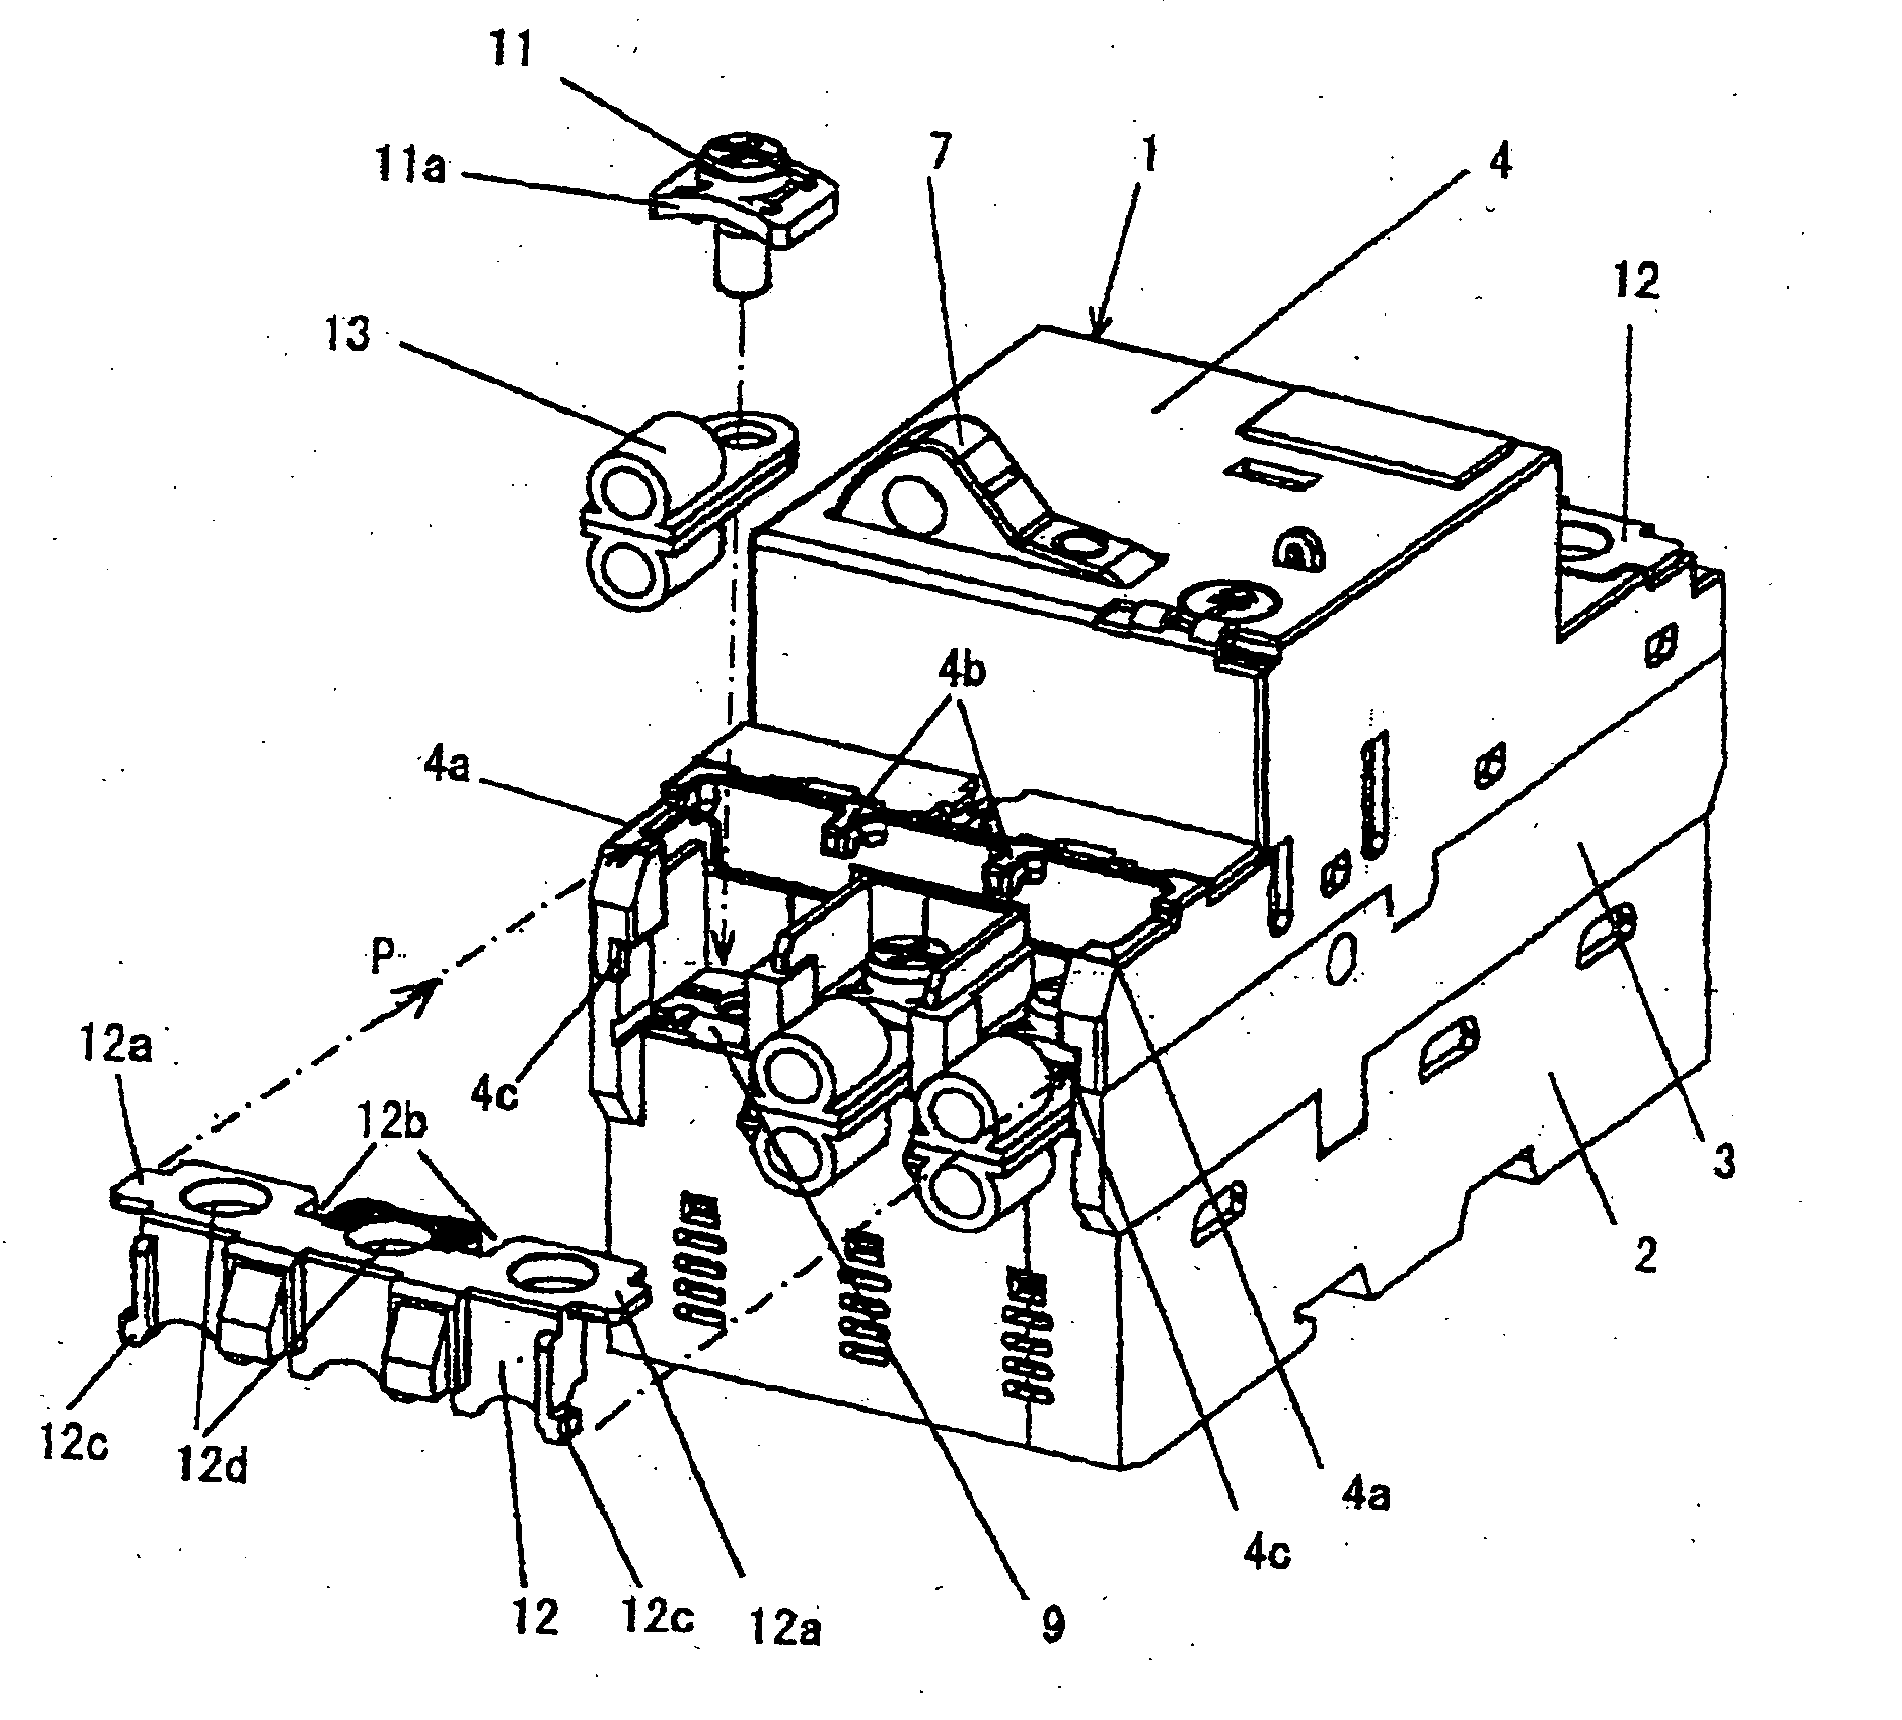 Circuit breaker and terminal cover